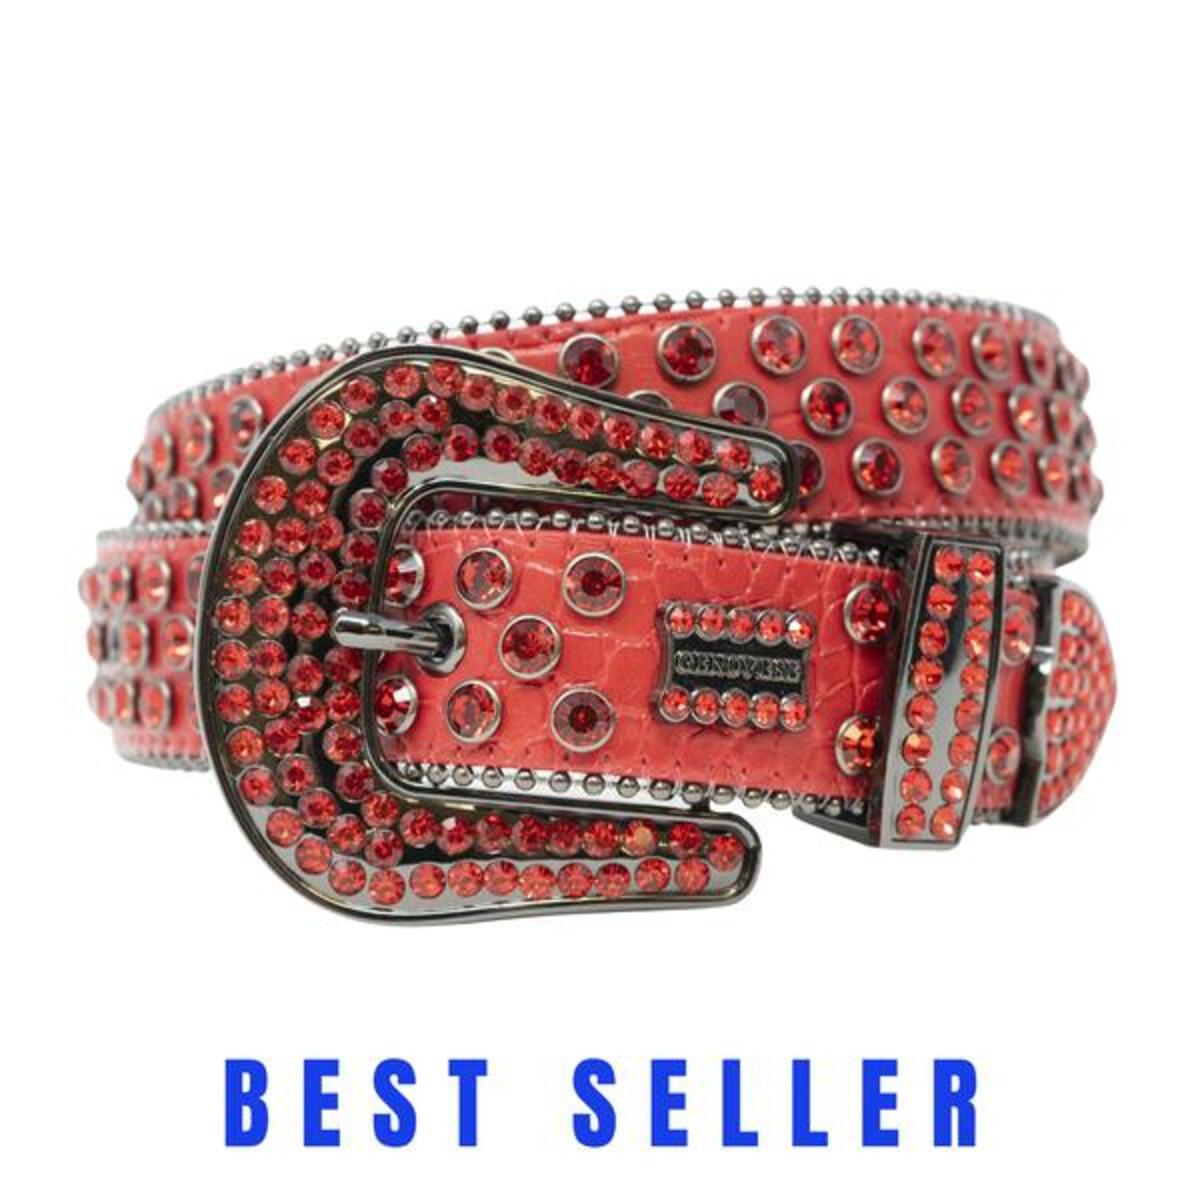 Brand new bb simon belt black/red size xxl